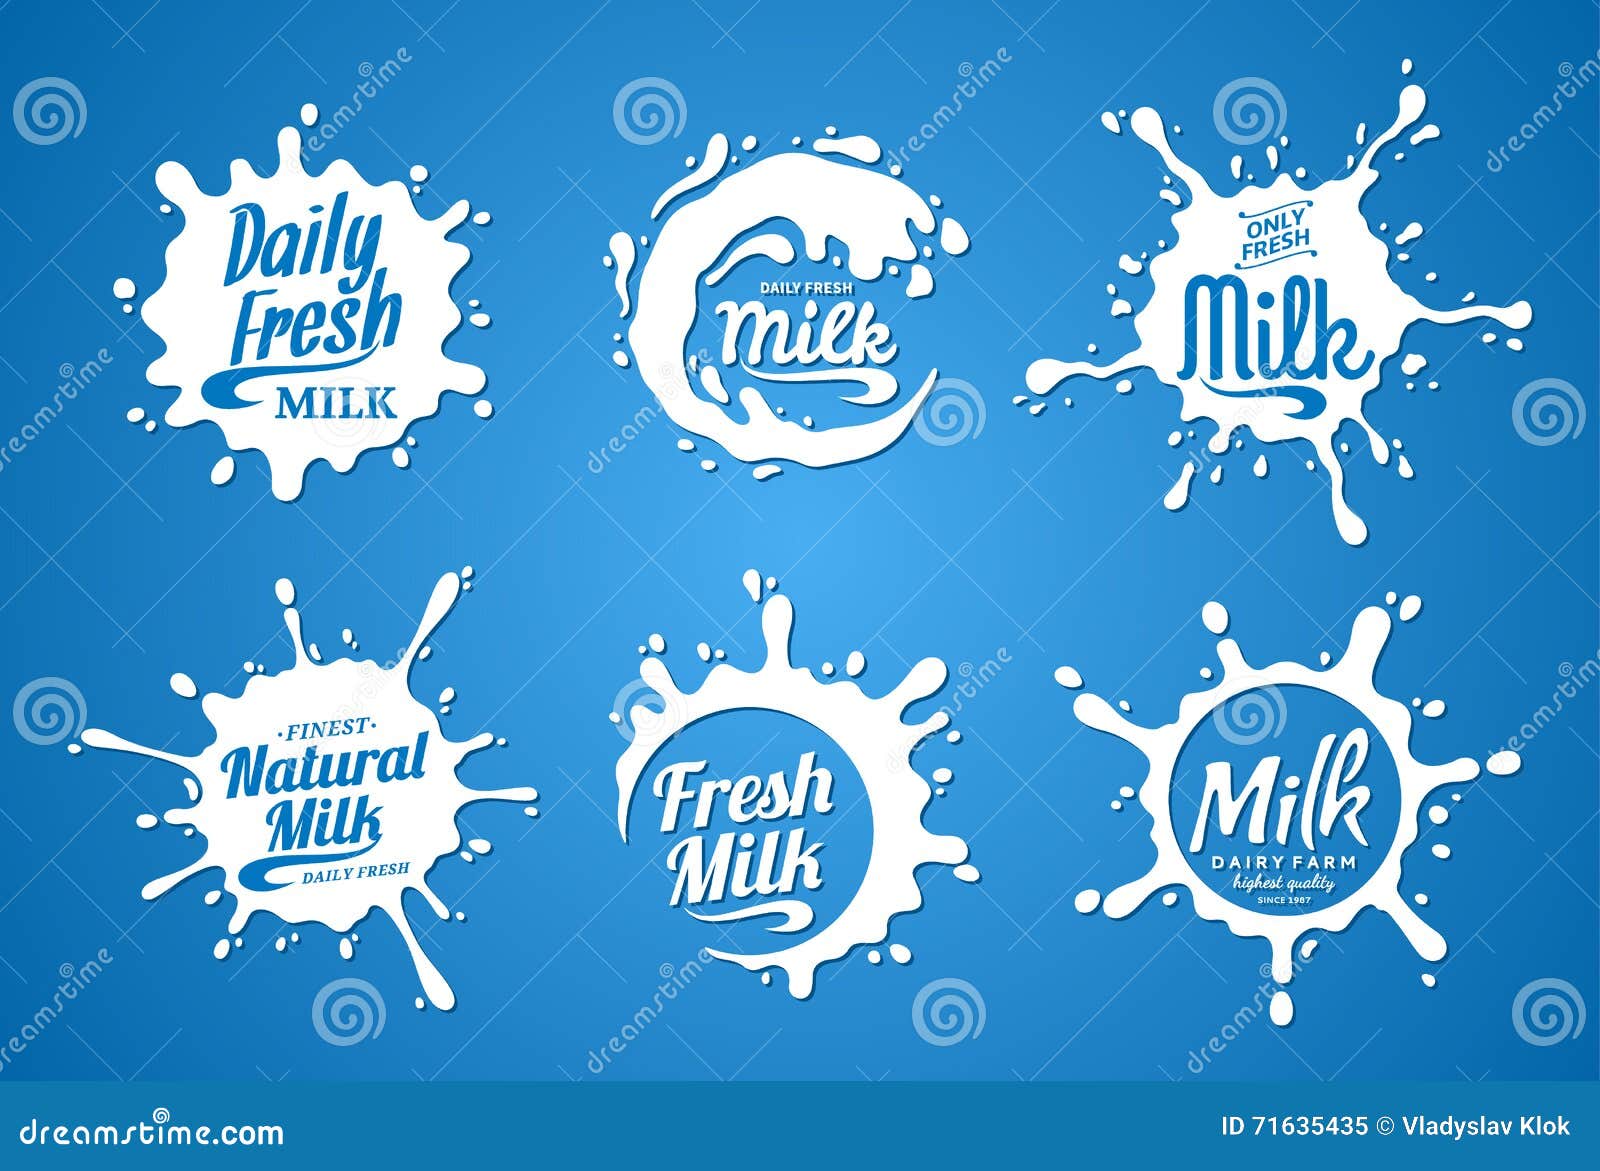 Dairy Cattle Farm Logo | BrandCrowd Logo Maker